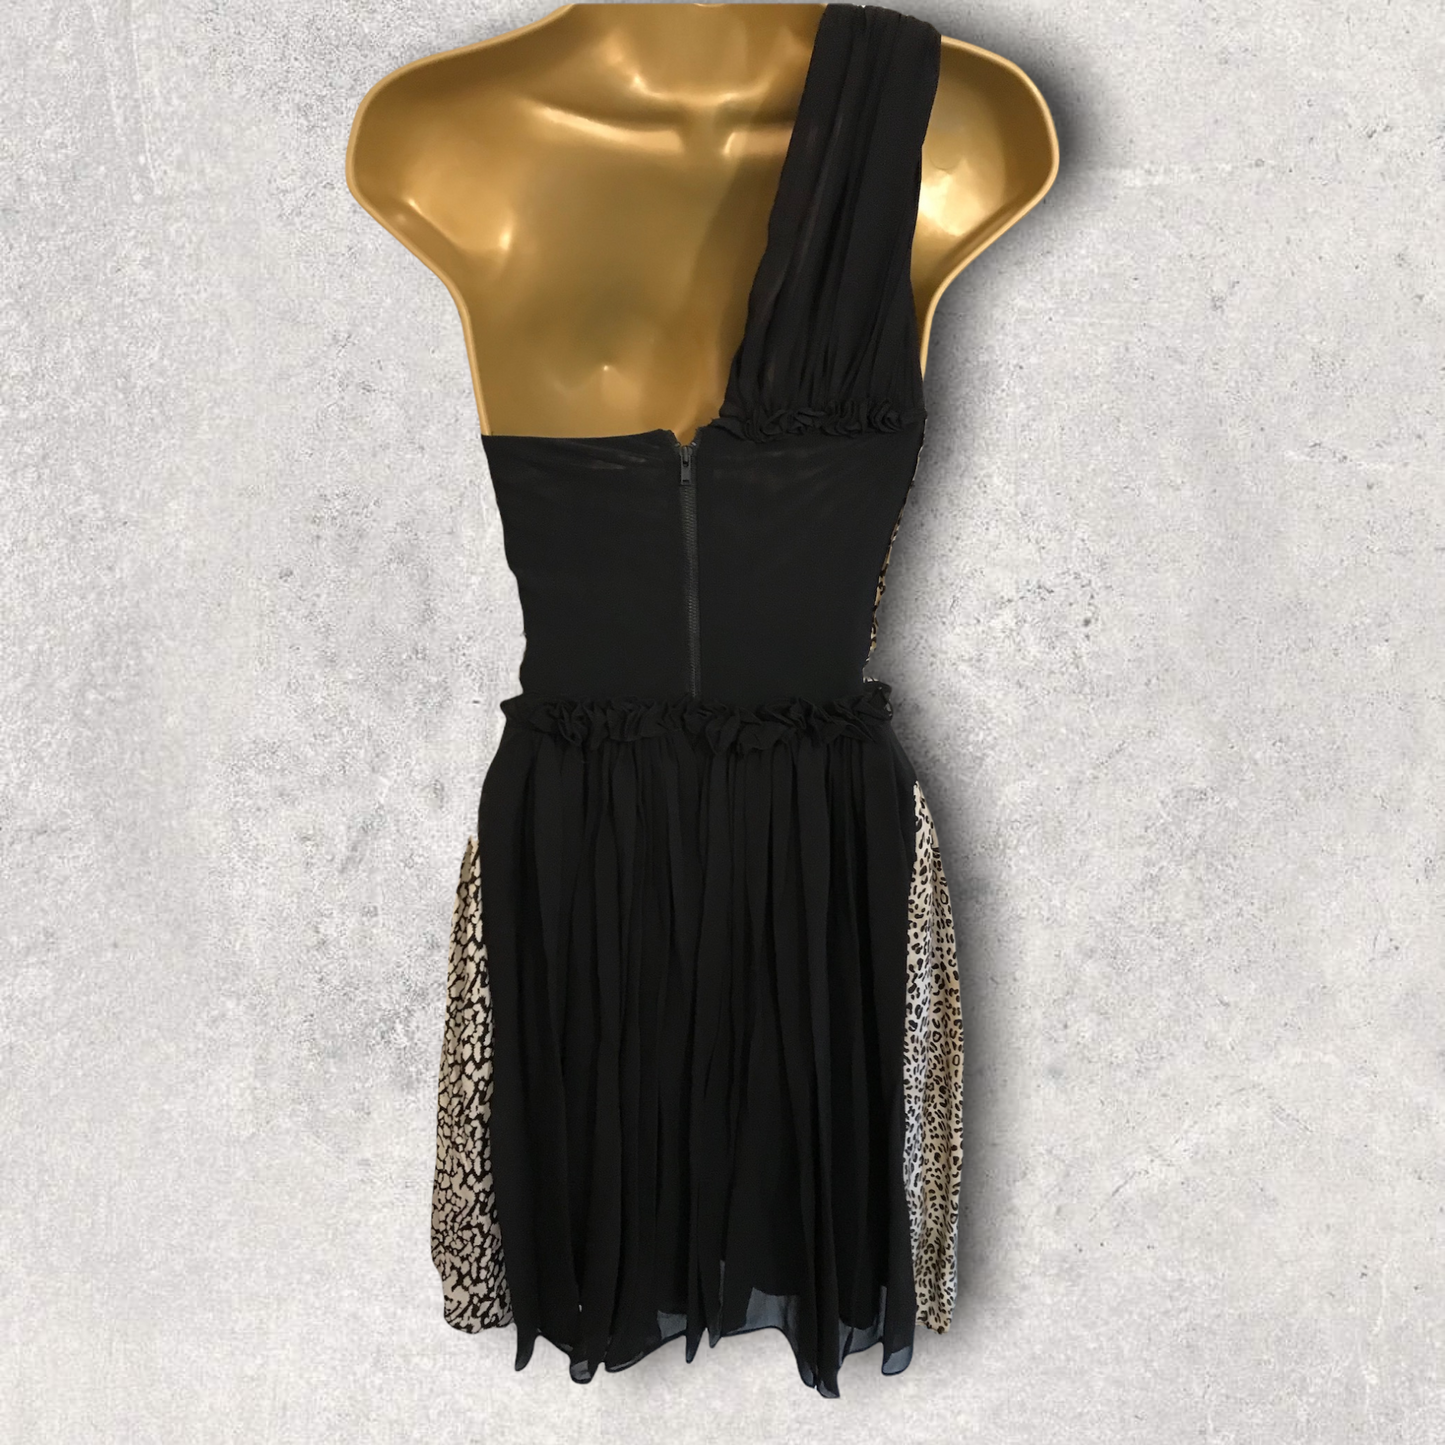 Reiss 1971 Myla Black Silk Leopard Print One Shoulder Dress UK 10 US 6 EU 38 BNWT RRP £189 Timeless Fashions